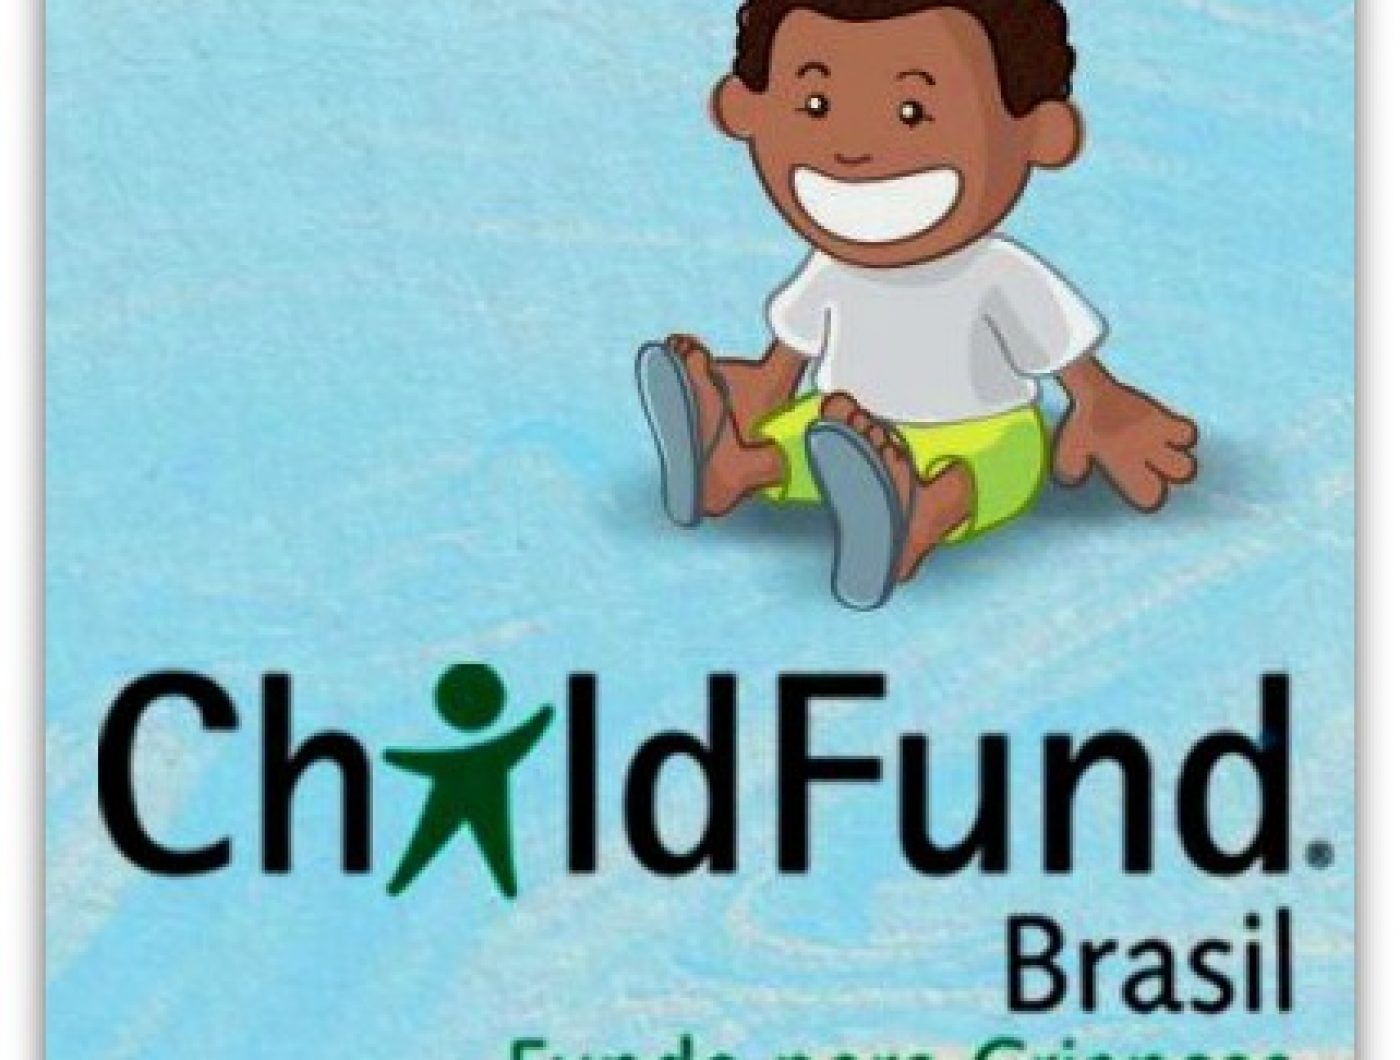 Exemplos que mudam vidas  Brasil